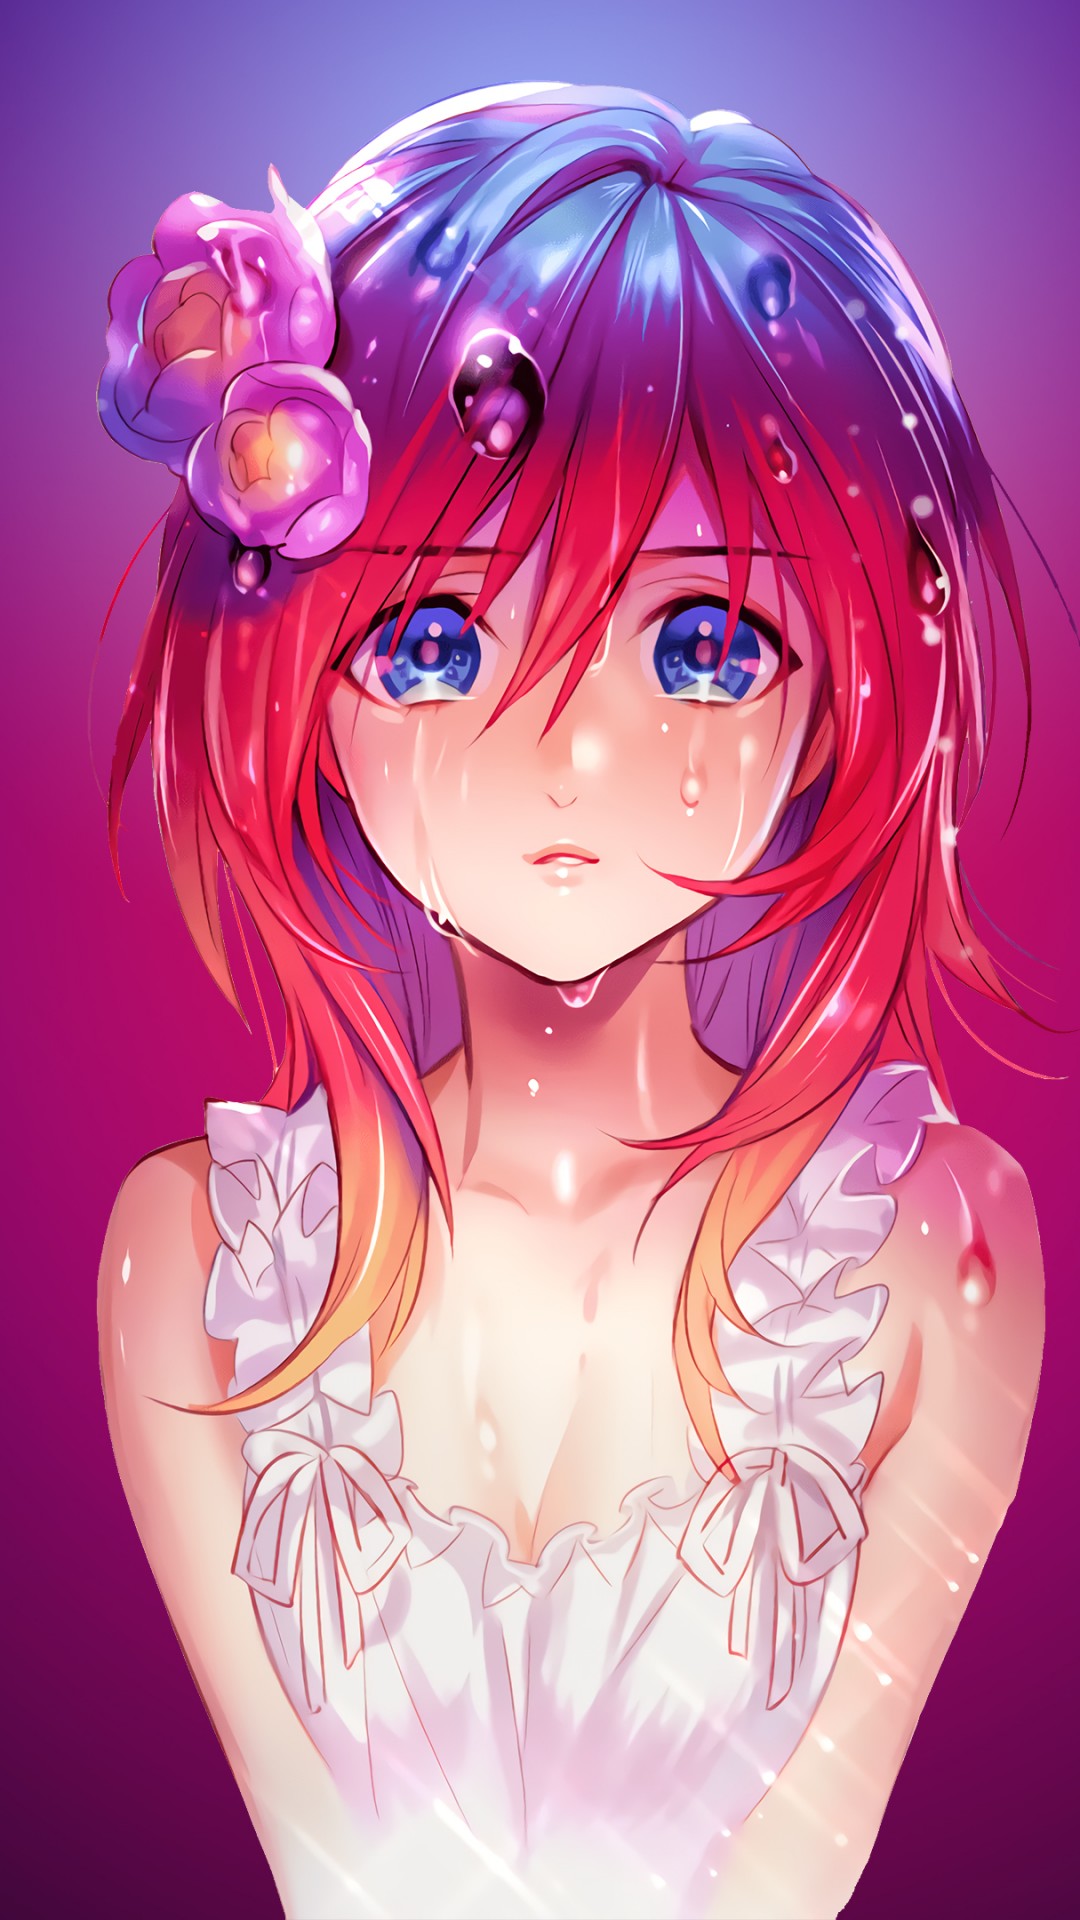 Cute Anime Girl Red Hair - 1080x1920 Wallpaper 